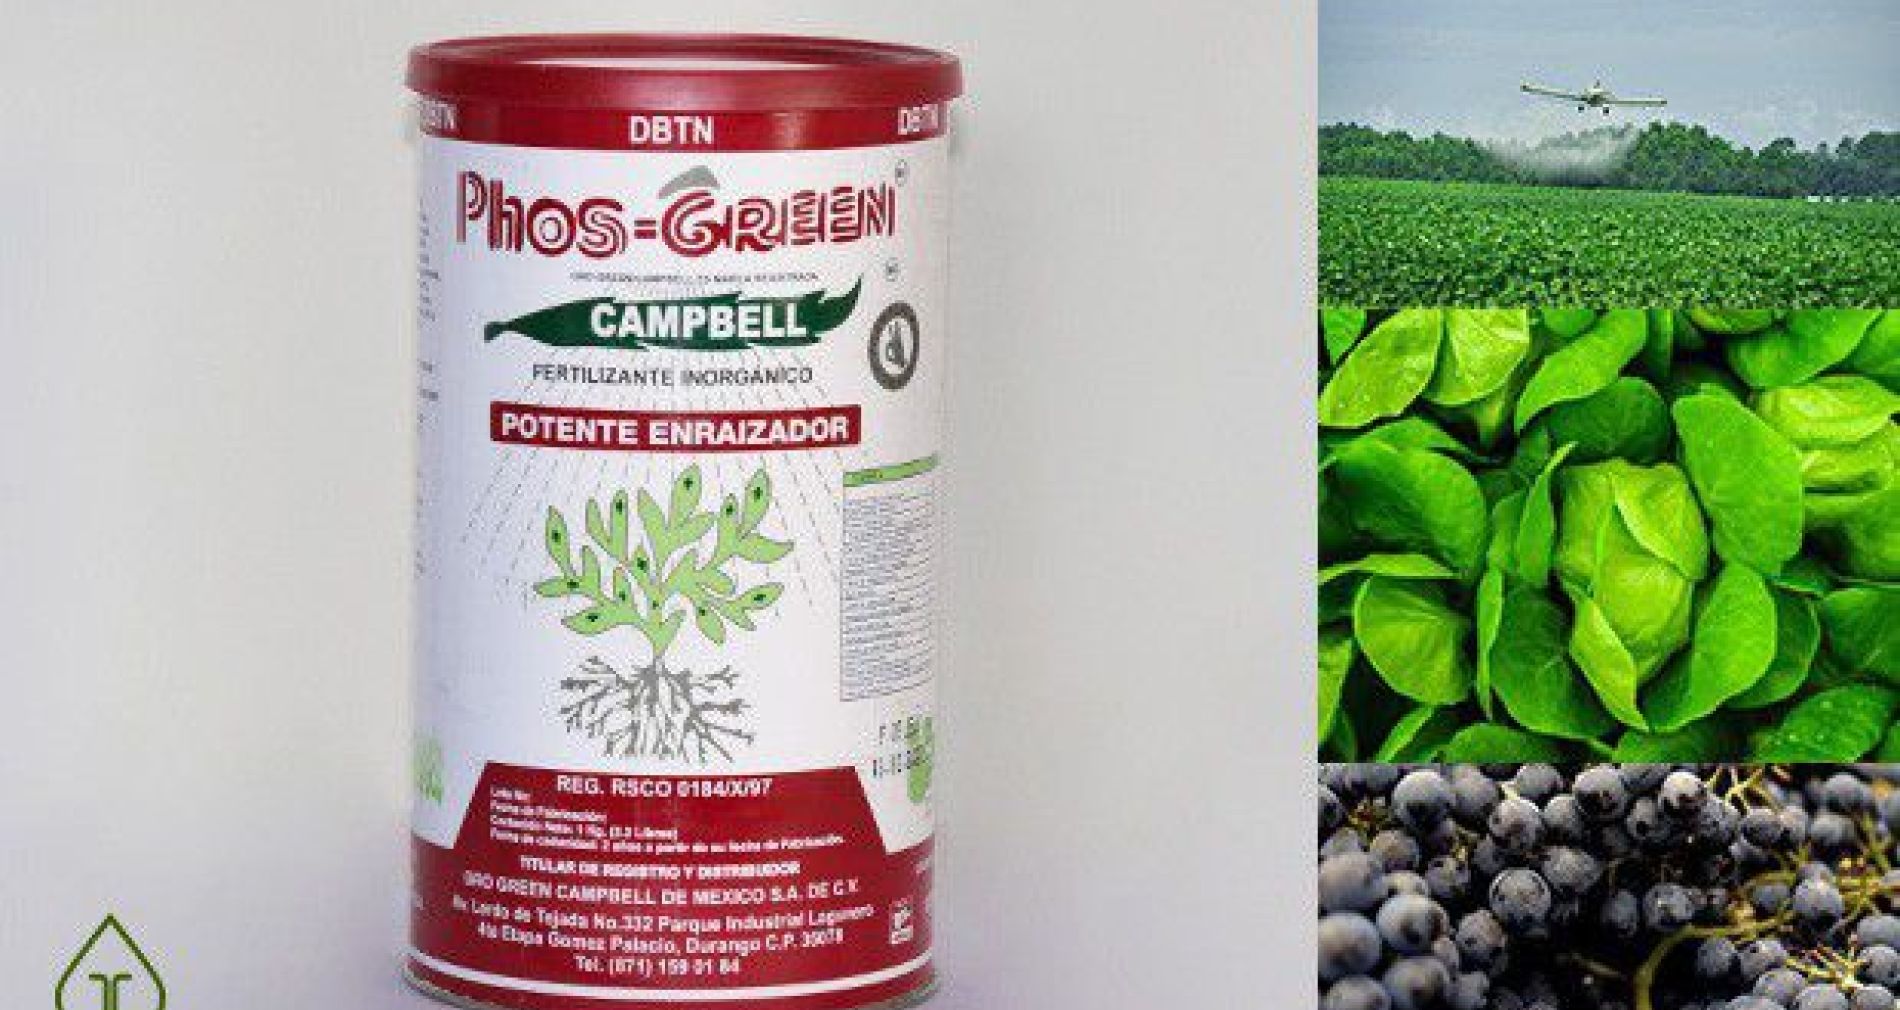 Phos Green Campbell Fórmula 12-60-0 Fertilizante Foliar, Potente Enraizador